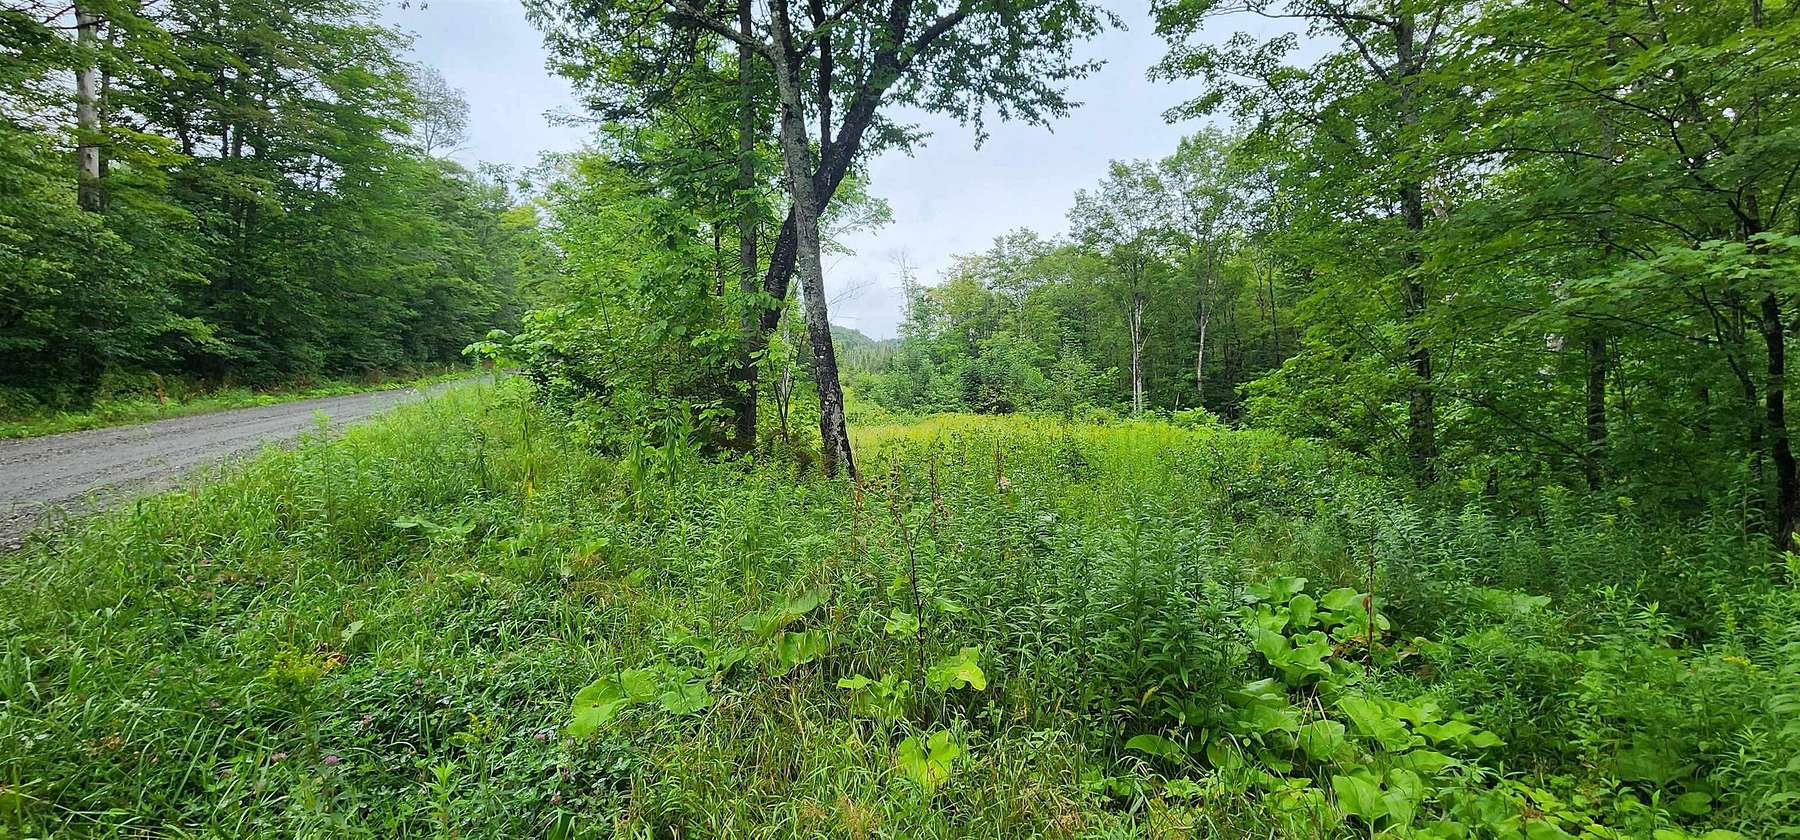 28 Acres of Land for Sale in Orange, Vermont